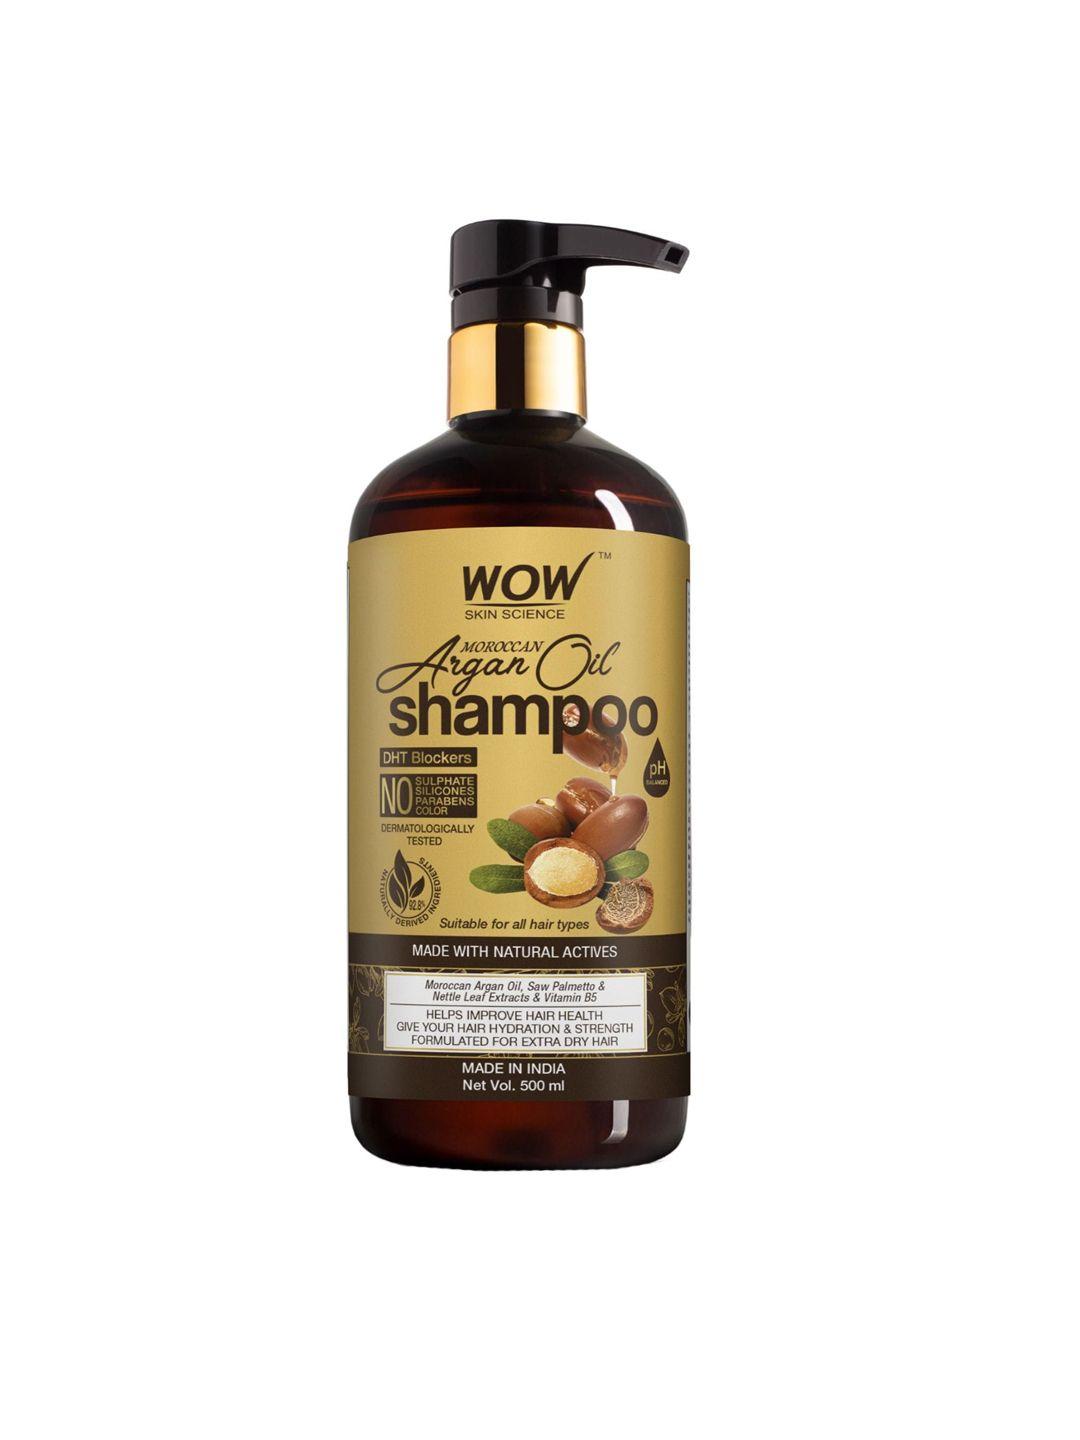 wow skin science moroccan argan oil shampoo with dht blocker - 500 ml